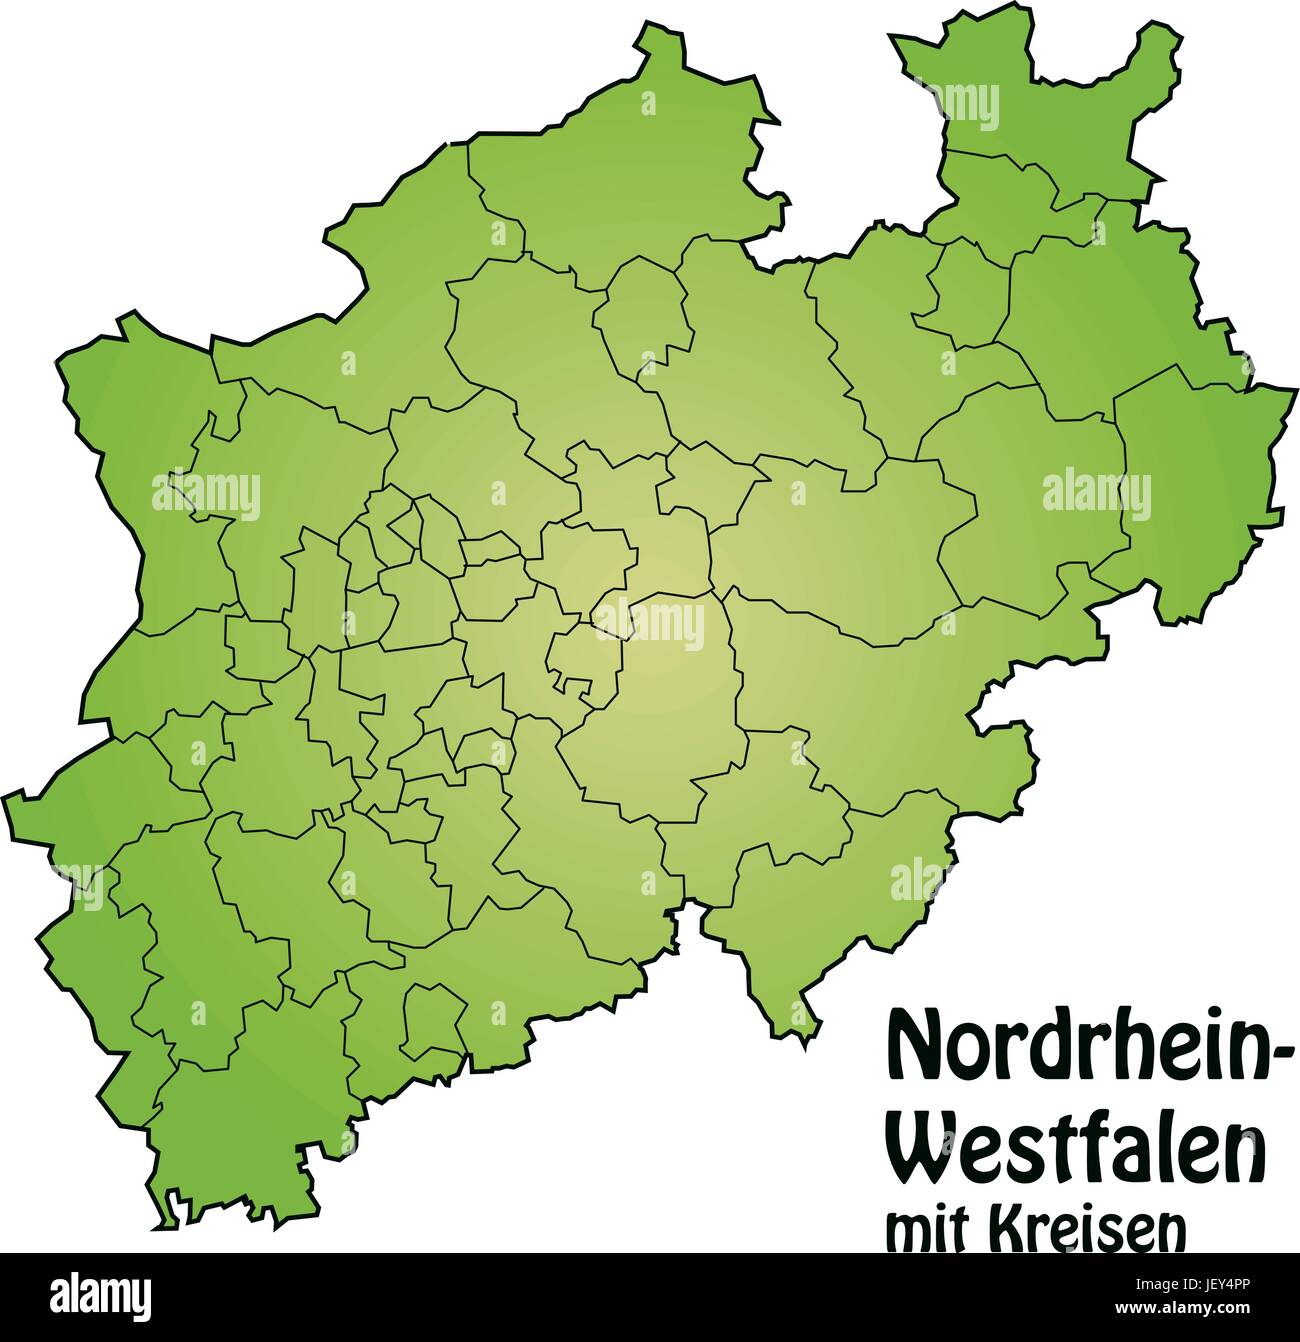 Nordrheinwestfalenkarte nordrhein Stock Vektor